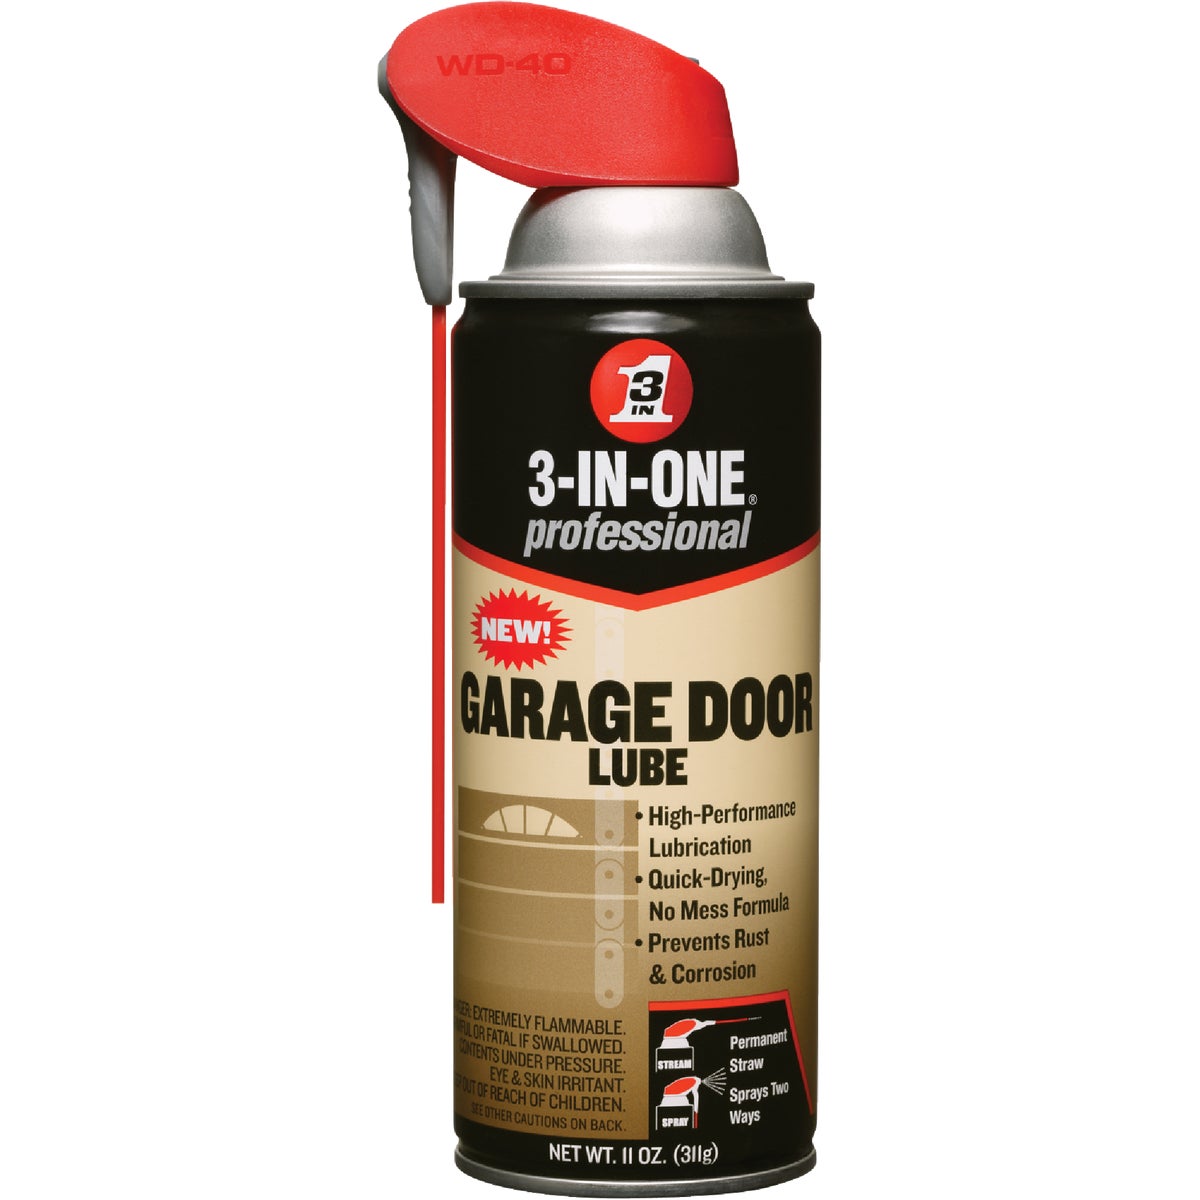 Item 574996, 3-IN-ONE professional garage door lube with Smart Straw.